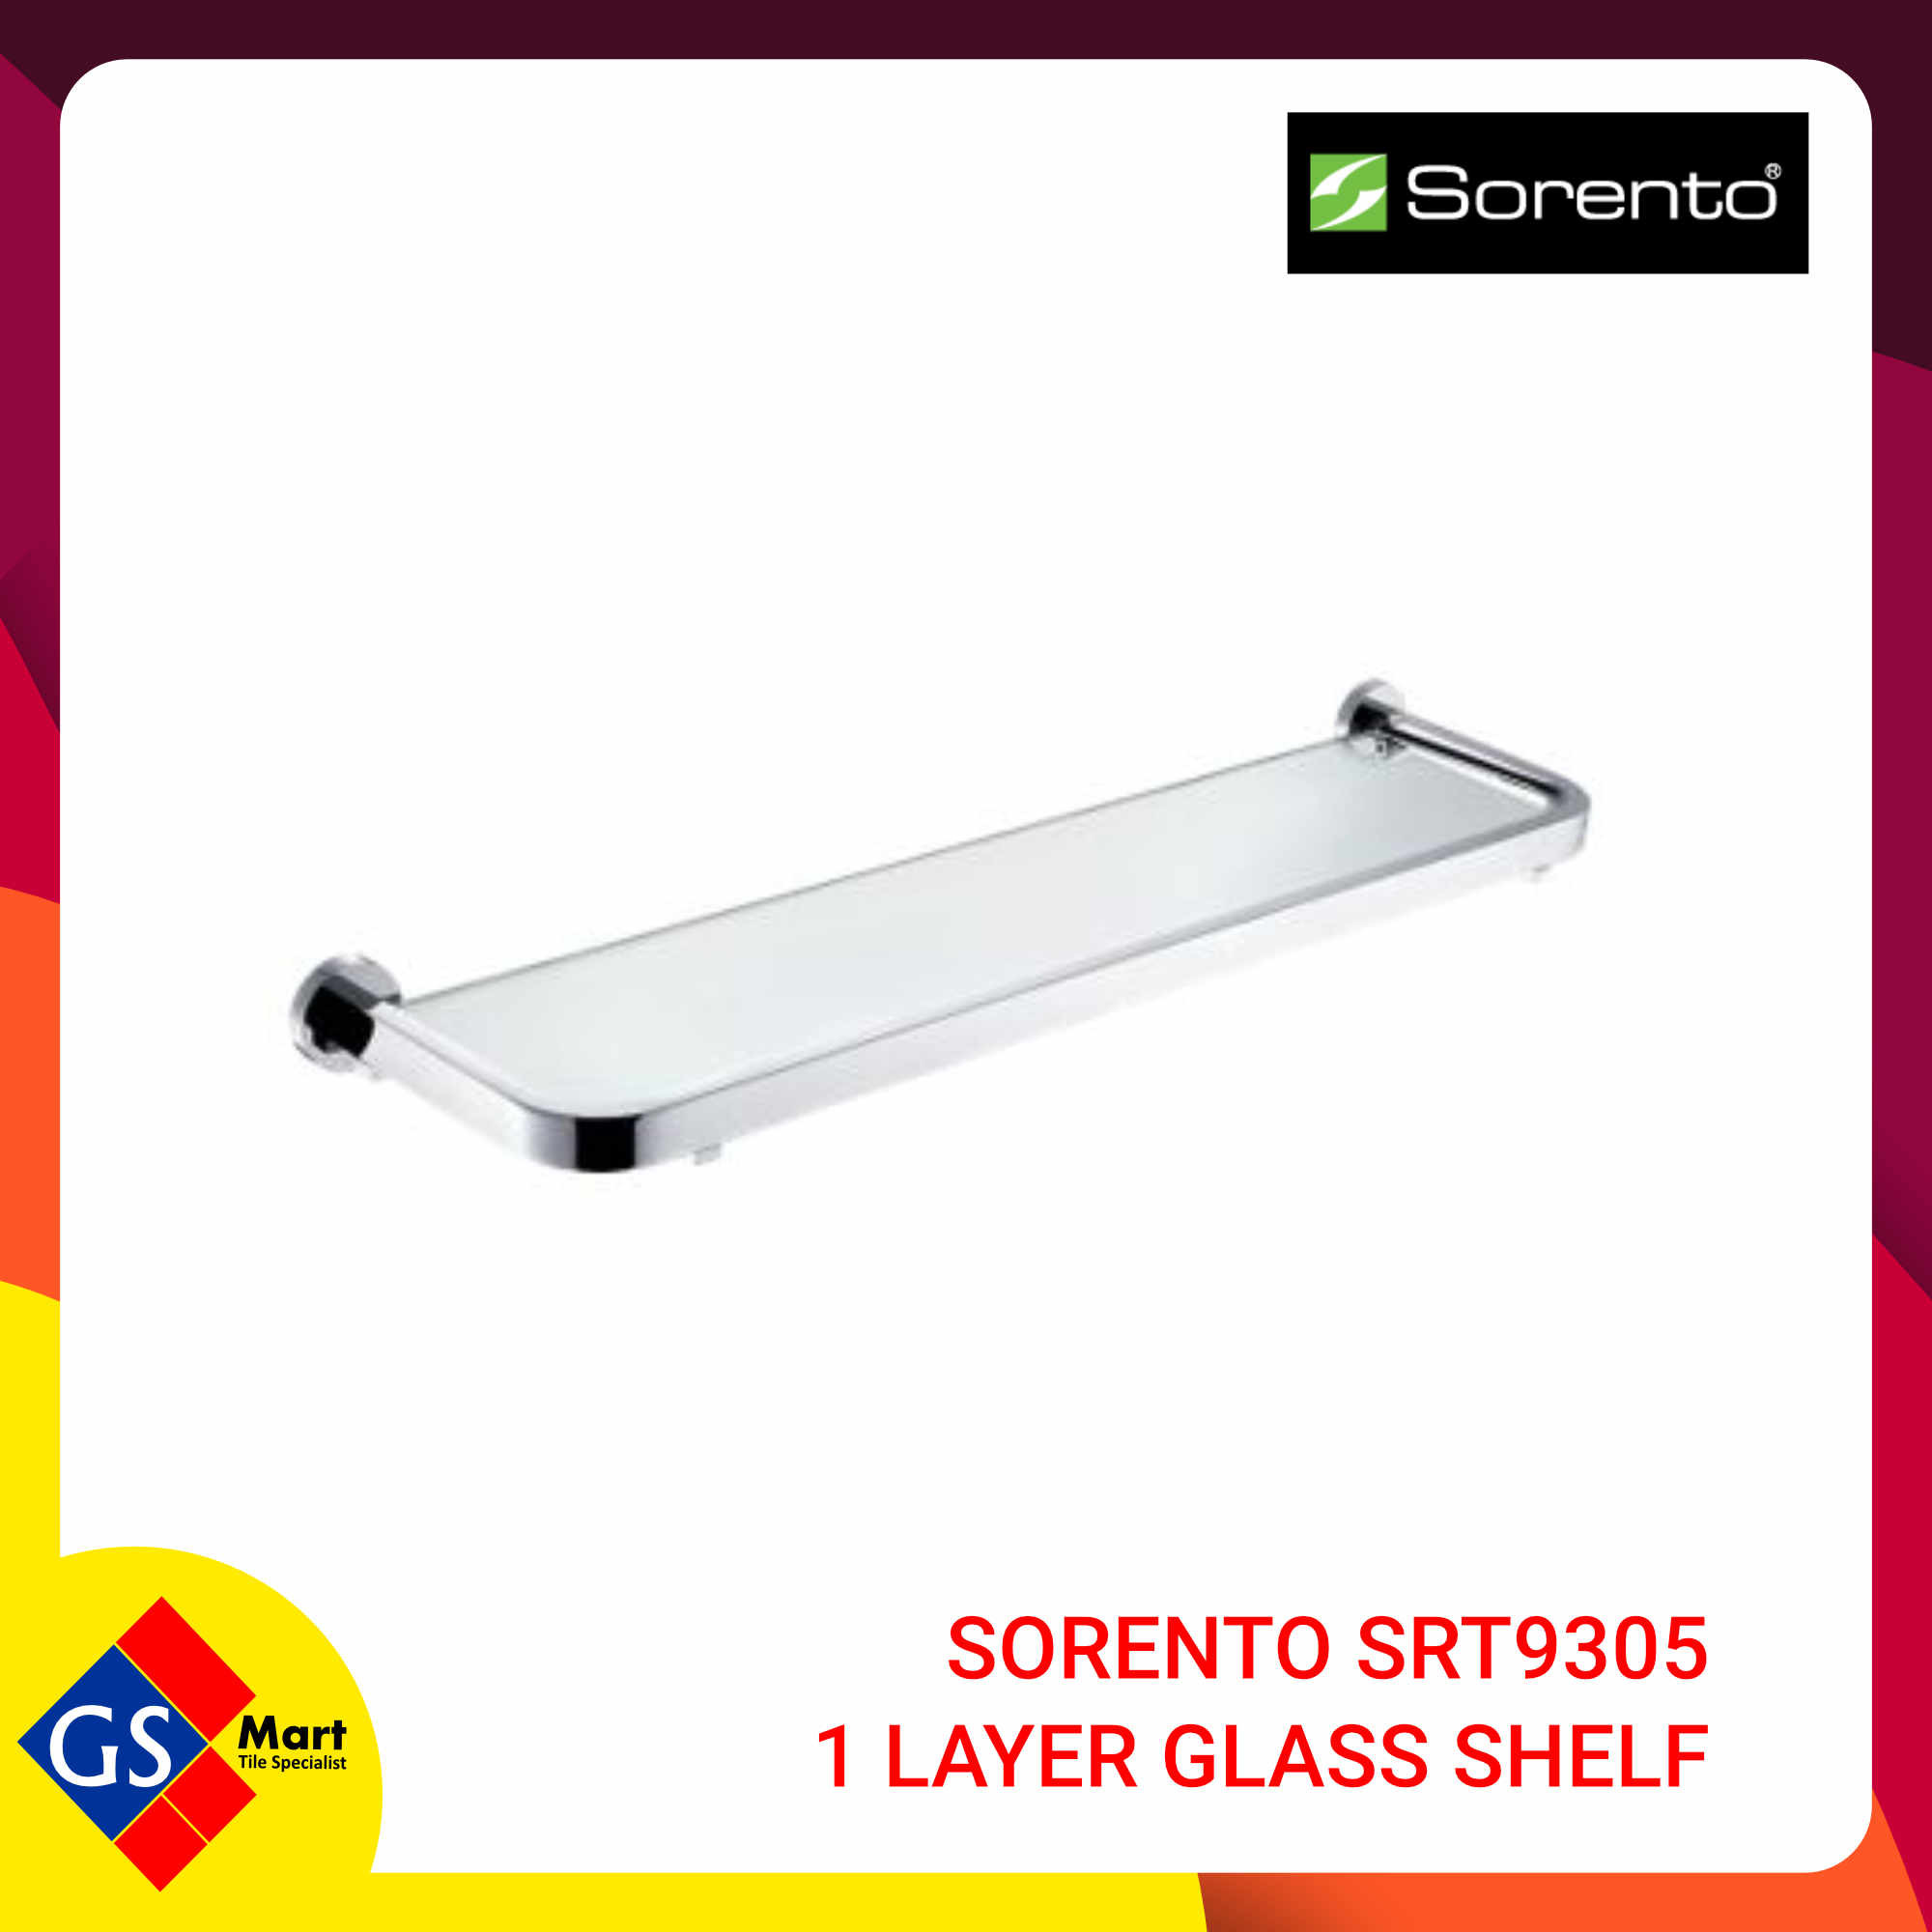 SORENTO SRT9305 1 LAYER GLASS SHELF